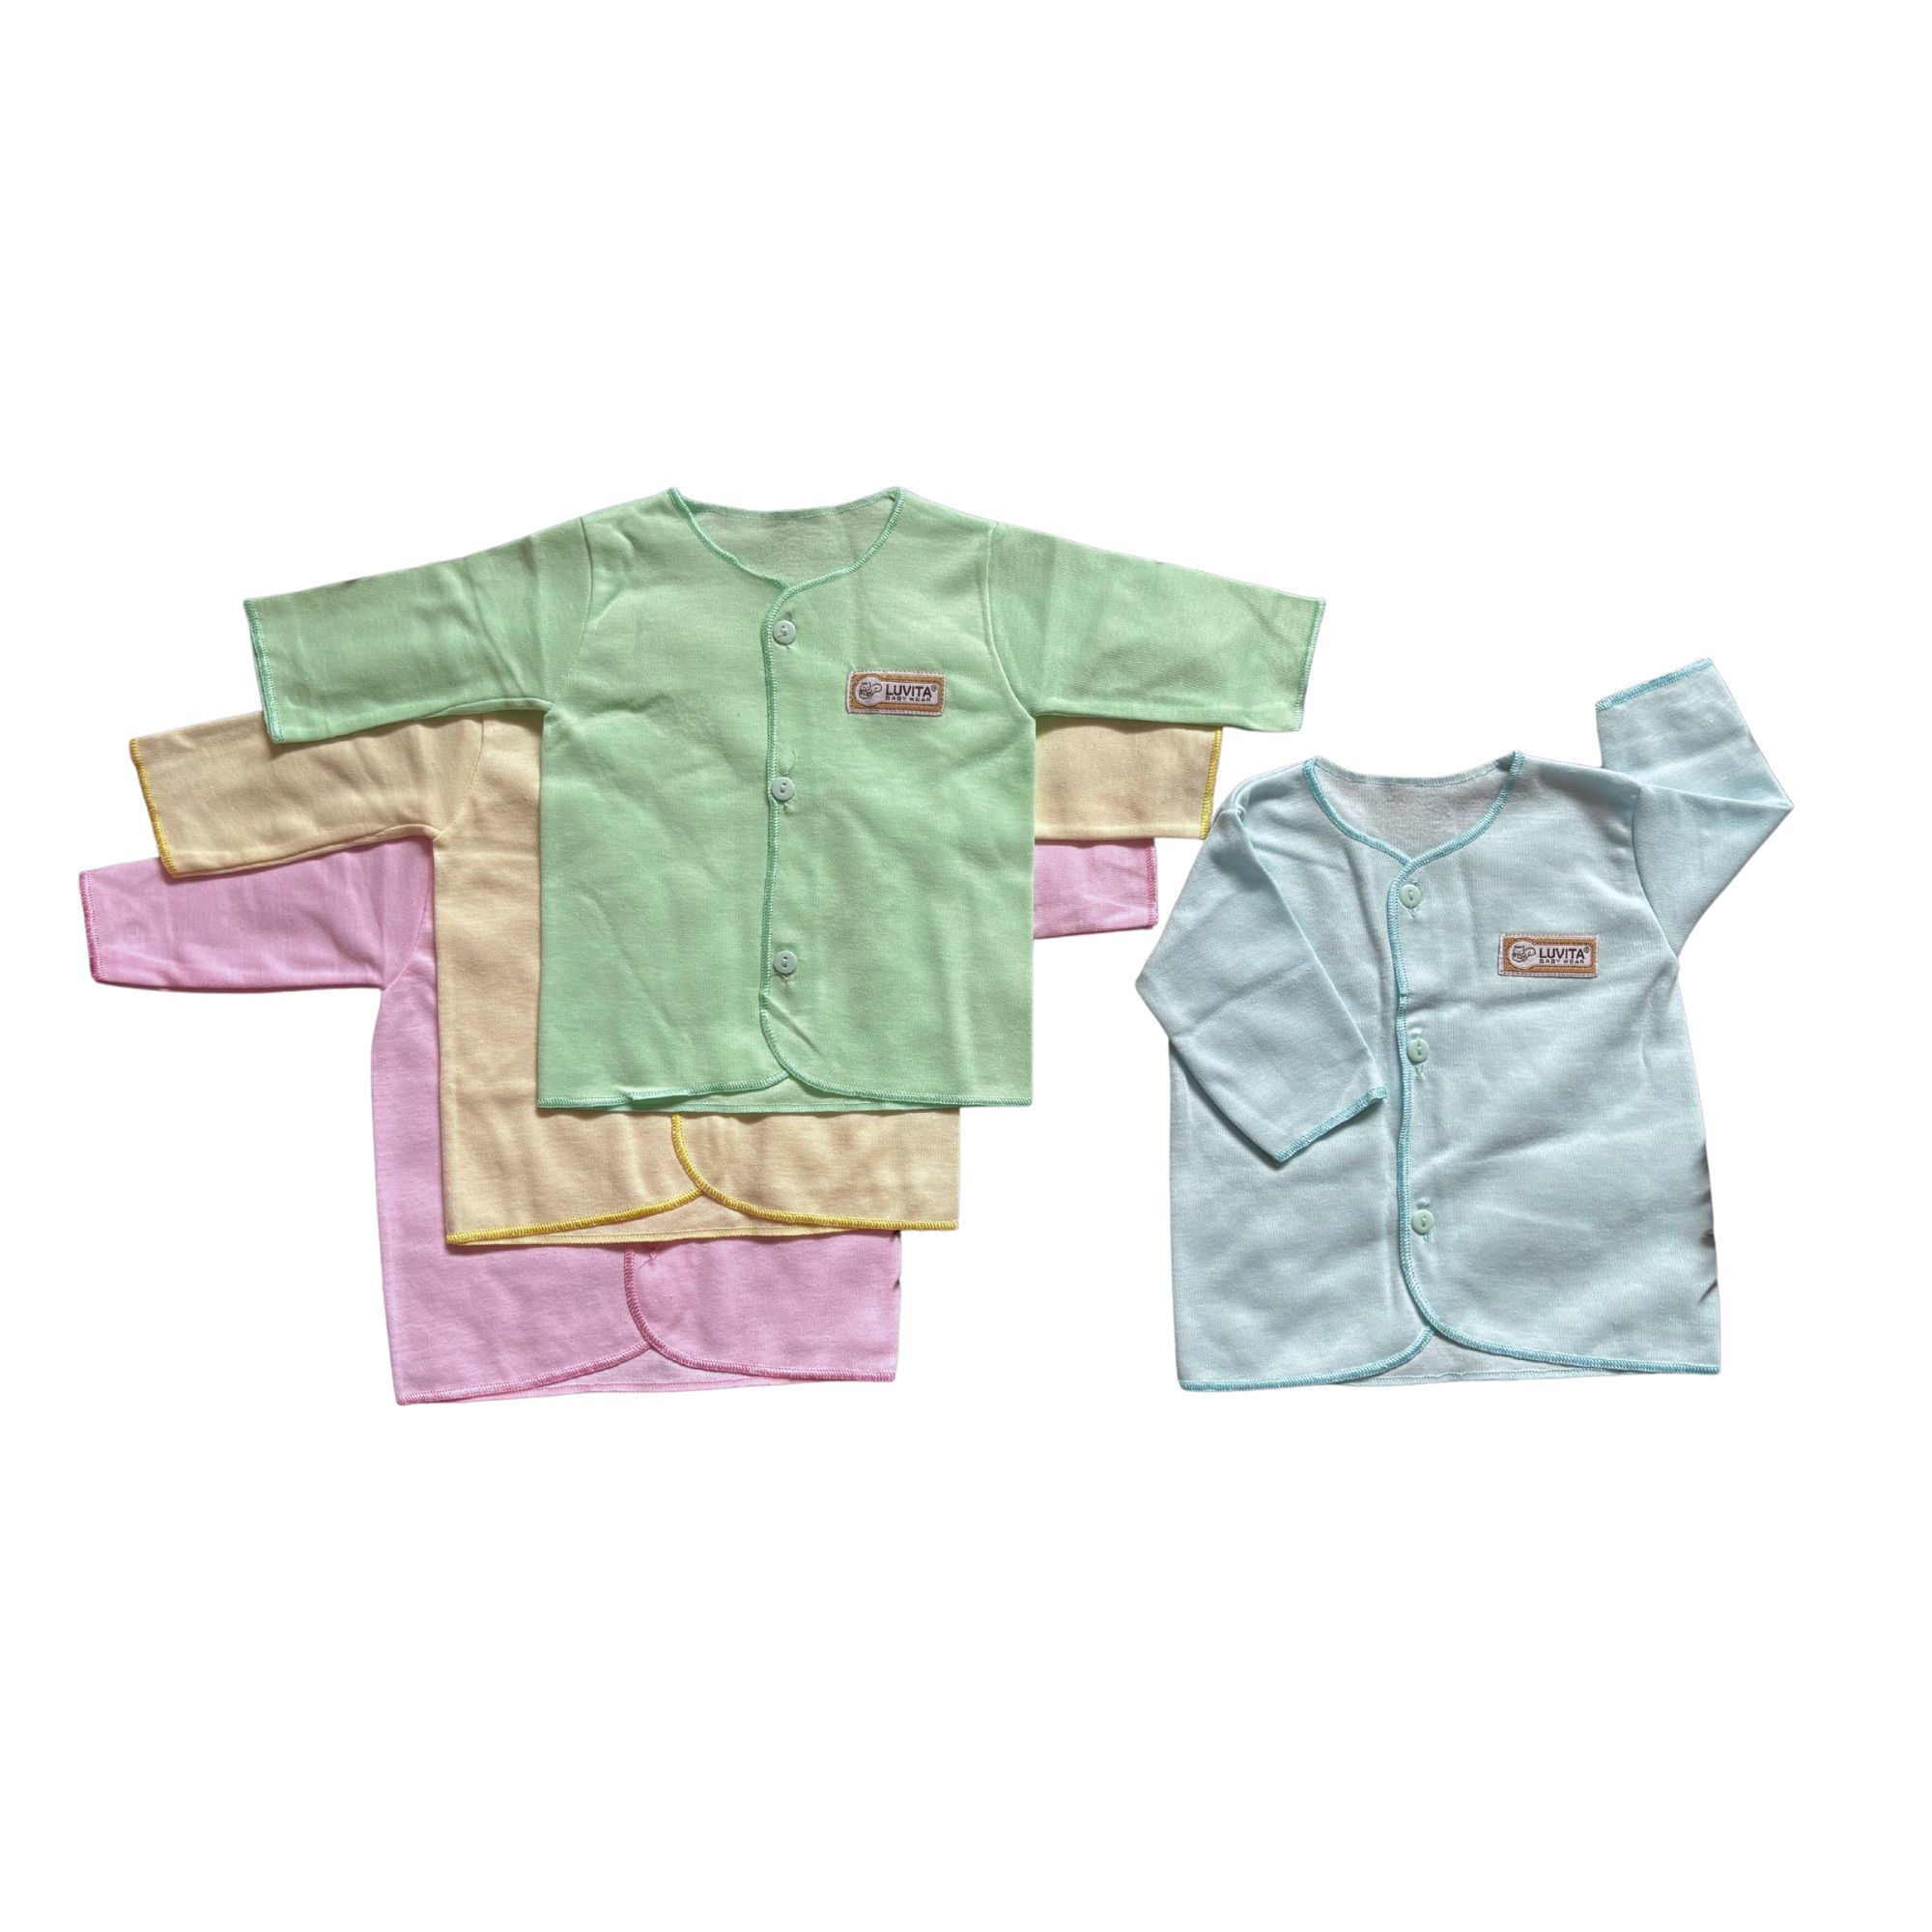 Luvita Long Sleeve Plain Shirt - Mix & Match Buy 2 for $12